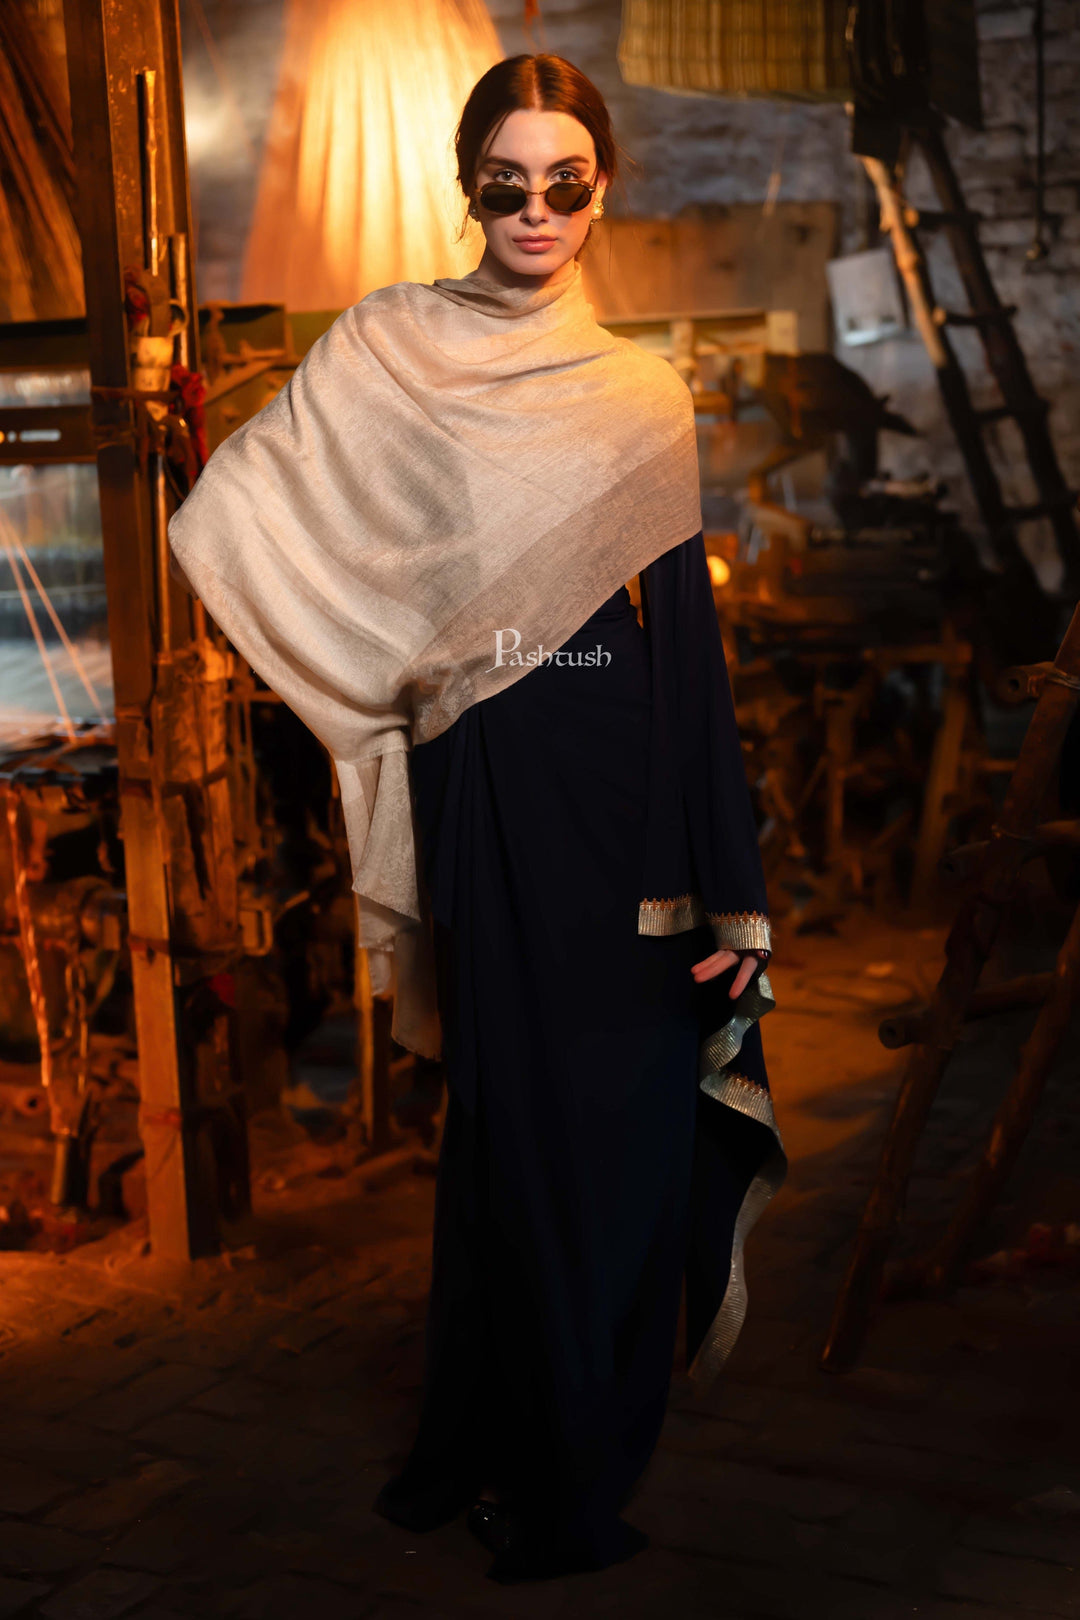 Pashtush India Womens Shawls Pashtush Womens Cashmere Stole, Ultra Soft, Warm, Light Weight Design, Multicolour